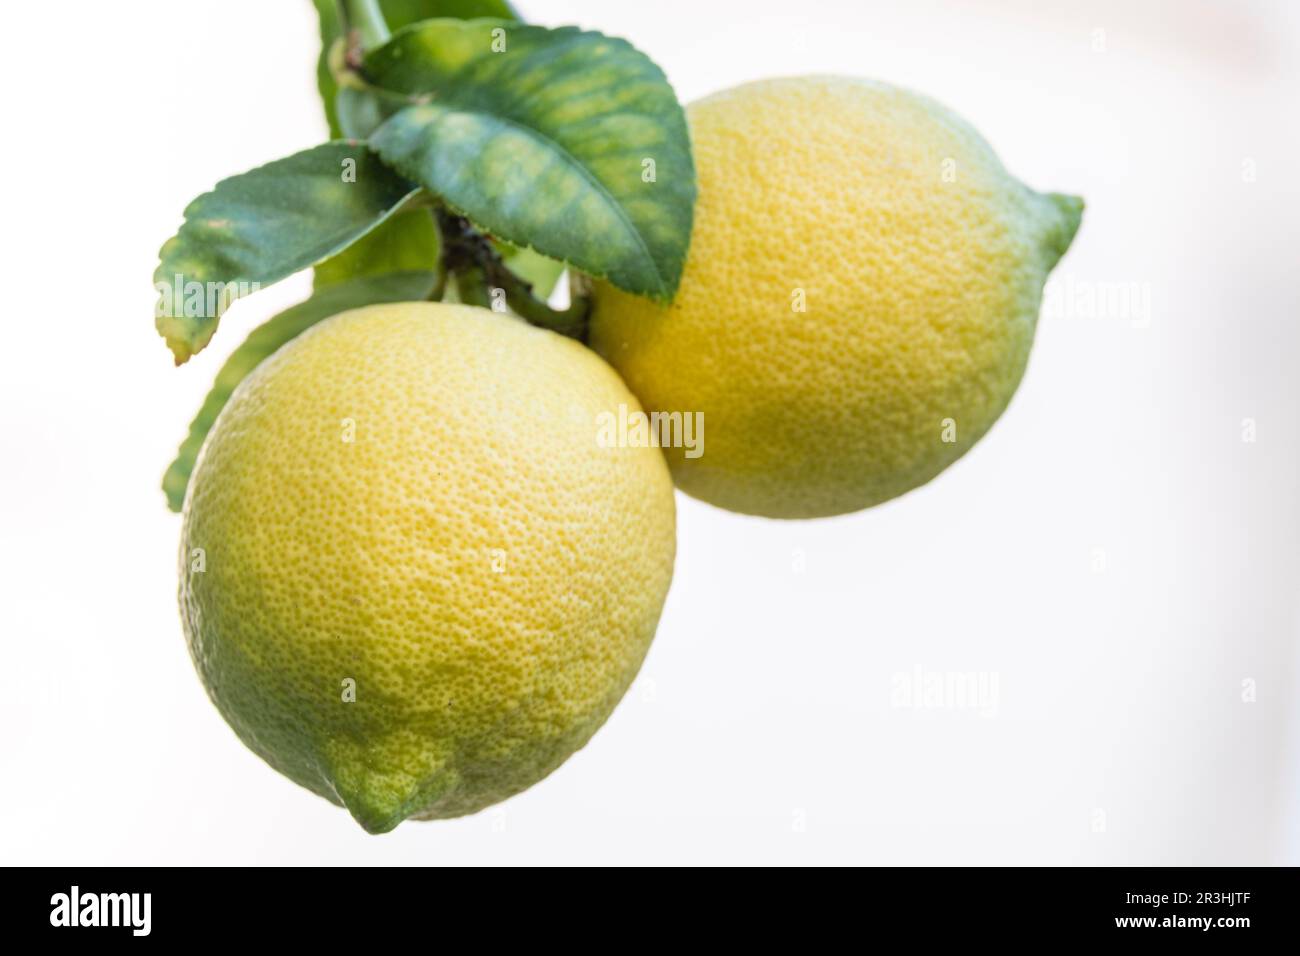 two lemons on the tree. Stock Photo